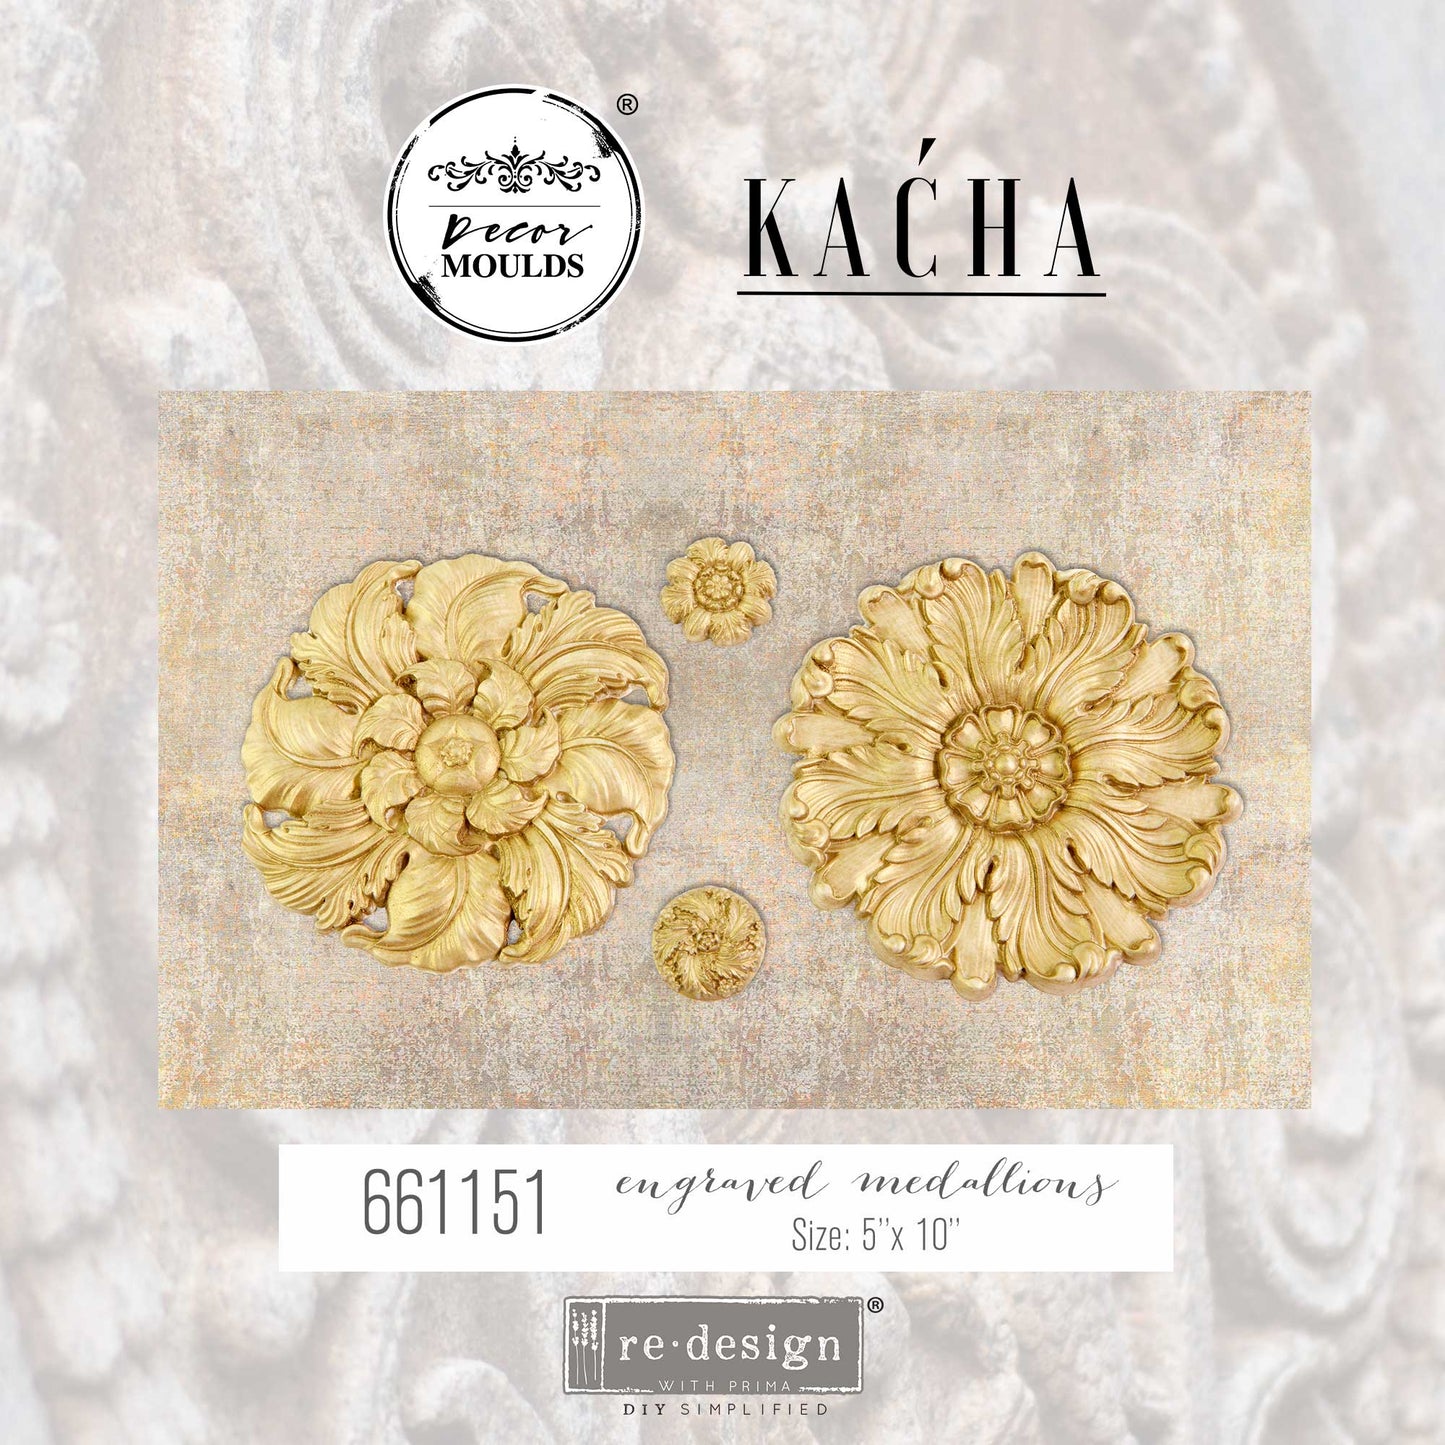 Engraved Medallions - Kacha - Decor Mould